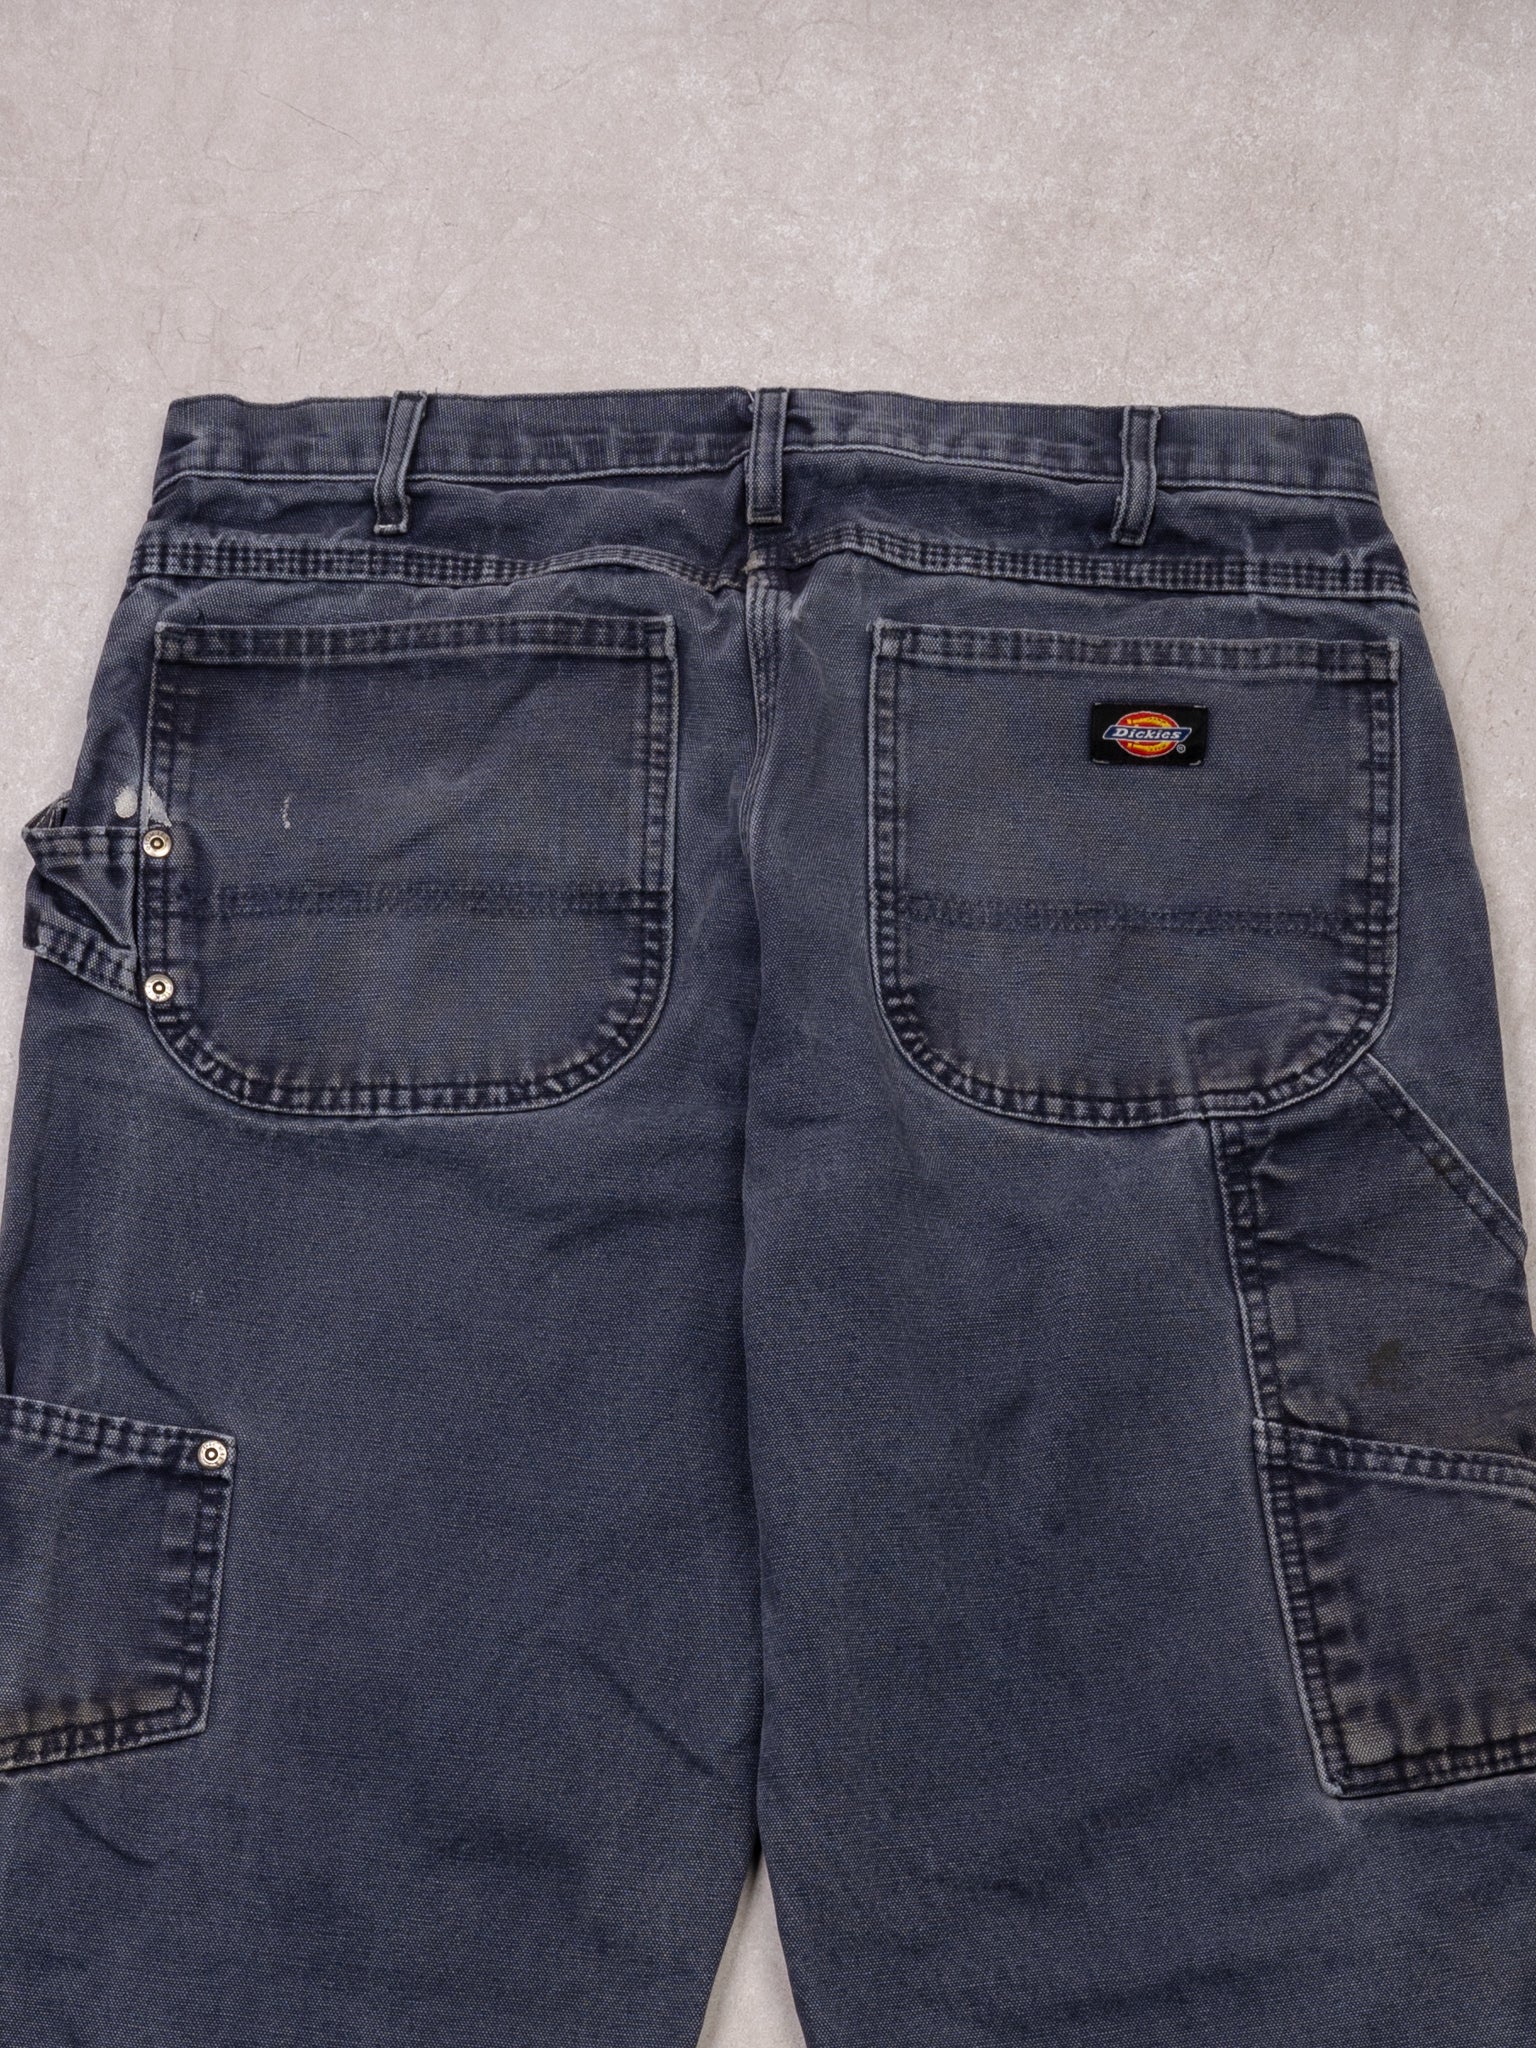 Vintage Dickies Washed Blue Carpenter Pants (32x31)